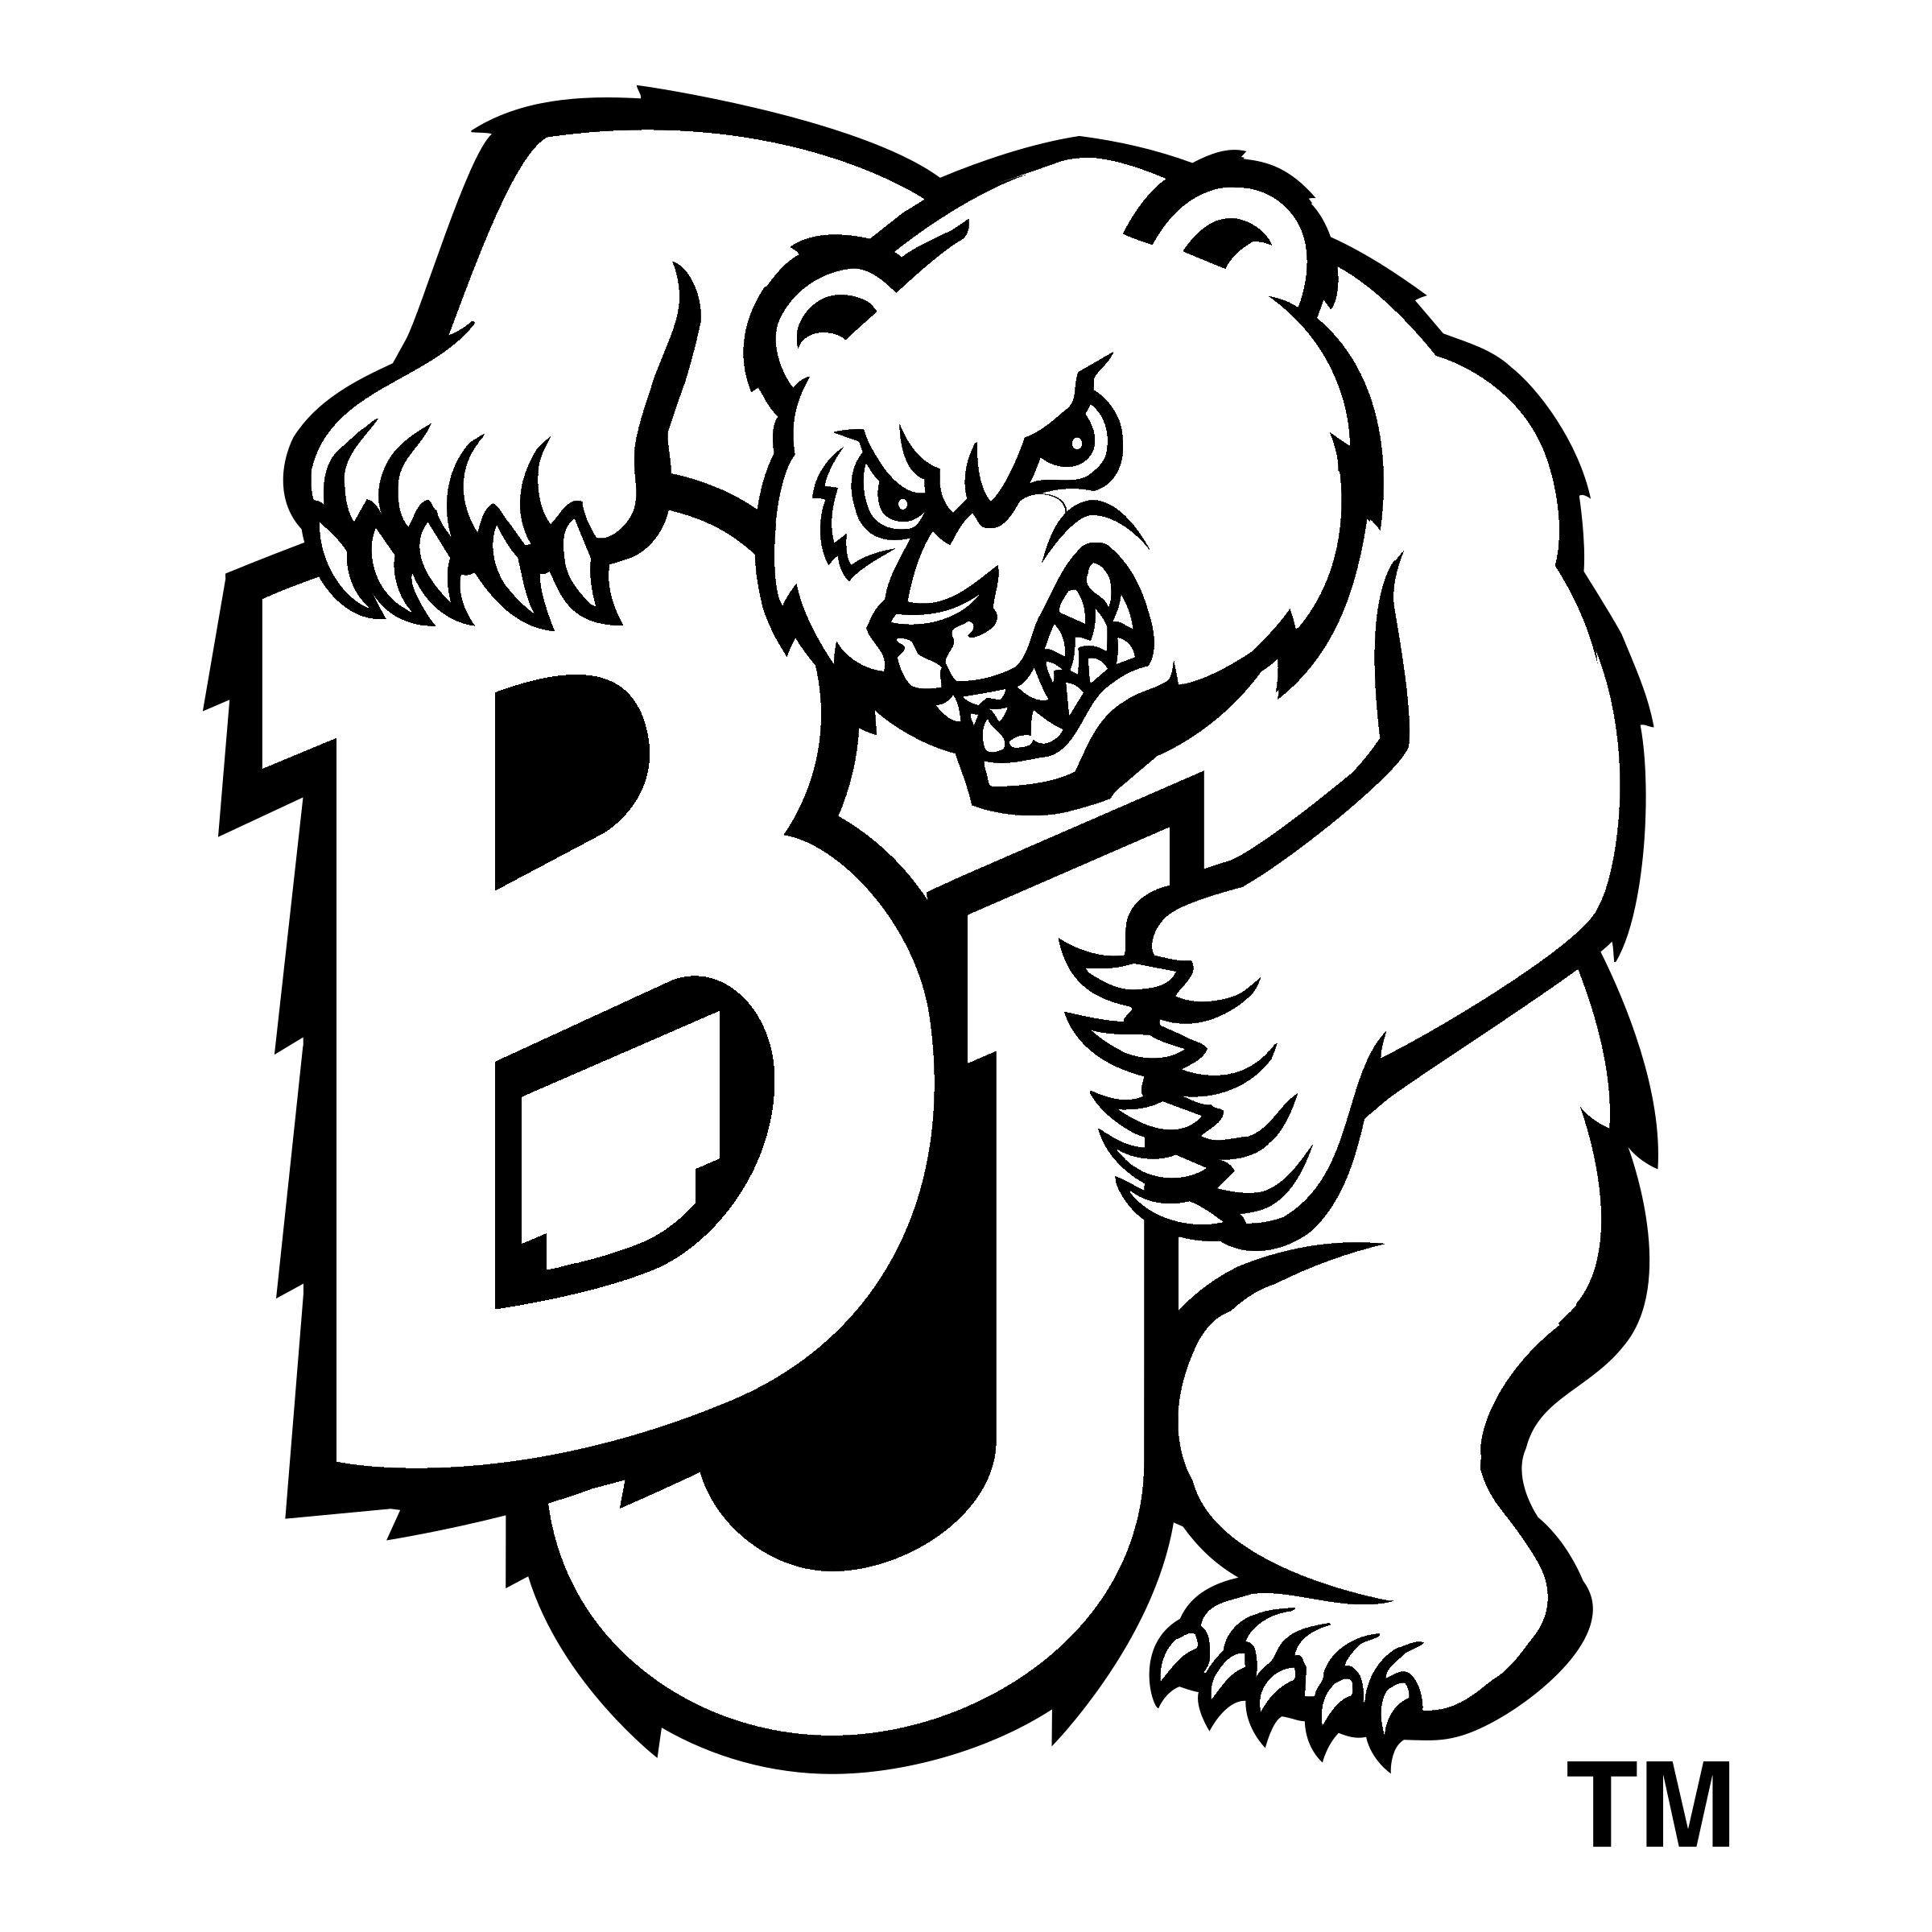 Black and White Bears Logo - Baylor Bears Logo PNG Transparent & SVG Vector